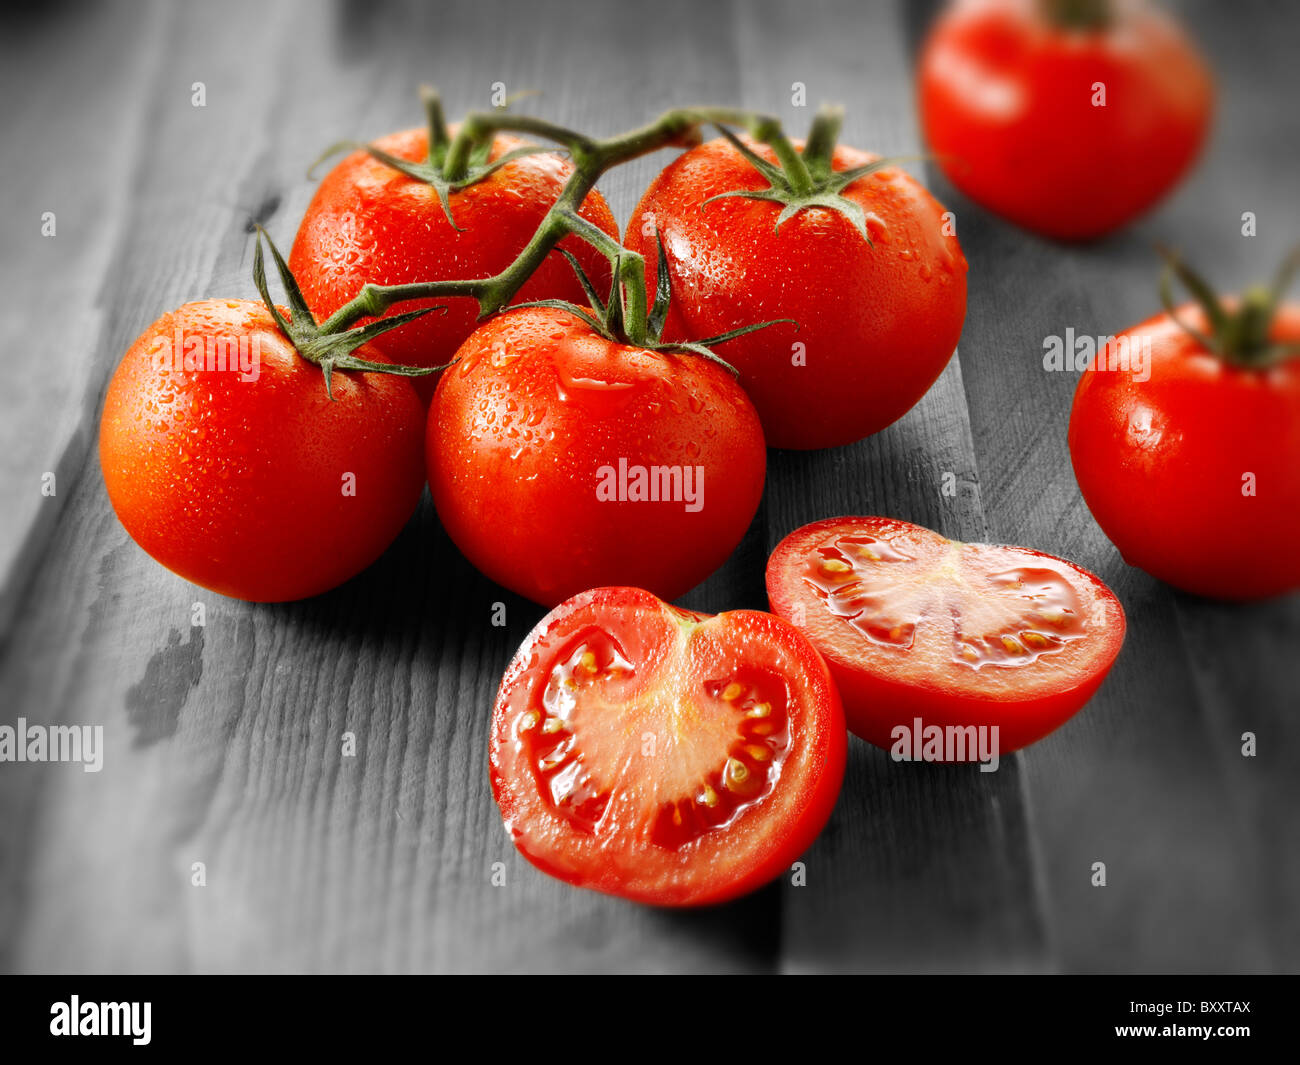 Jubilee vine tomatoes Stock Photo